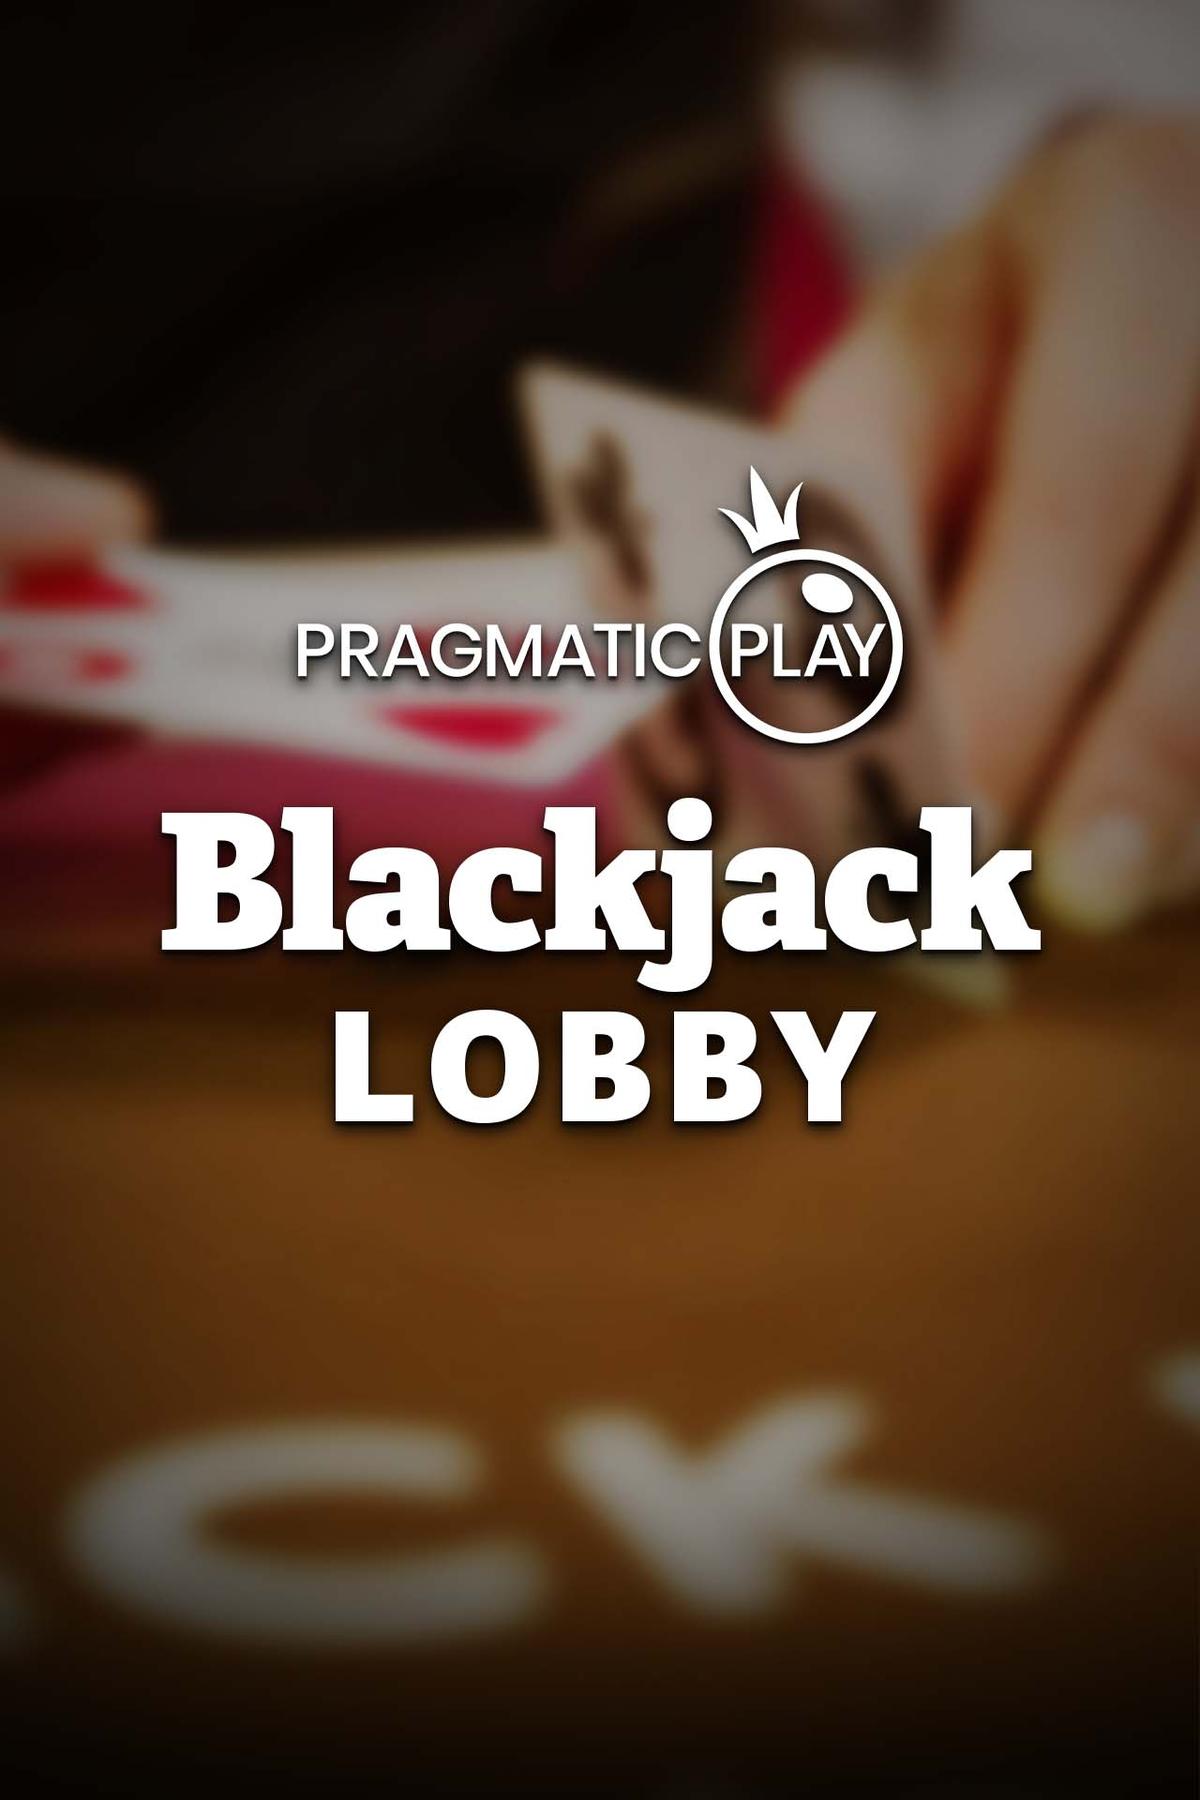 Blackjack Lobby Pragmatic Play